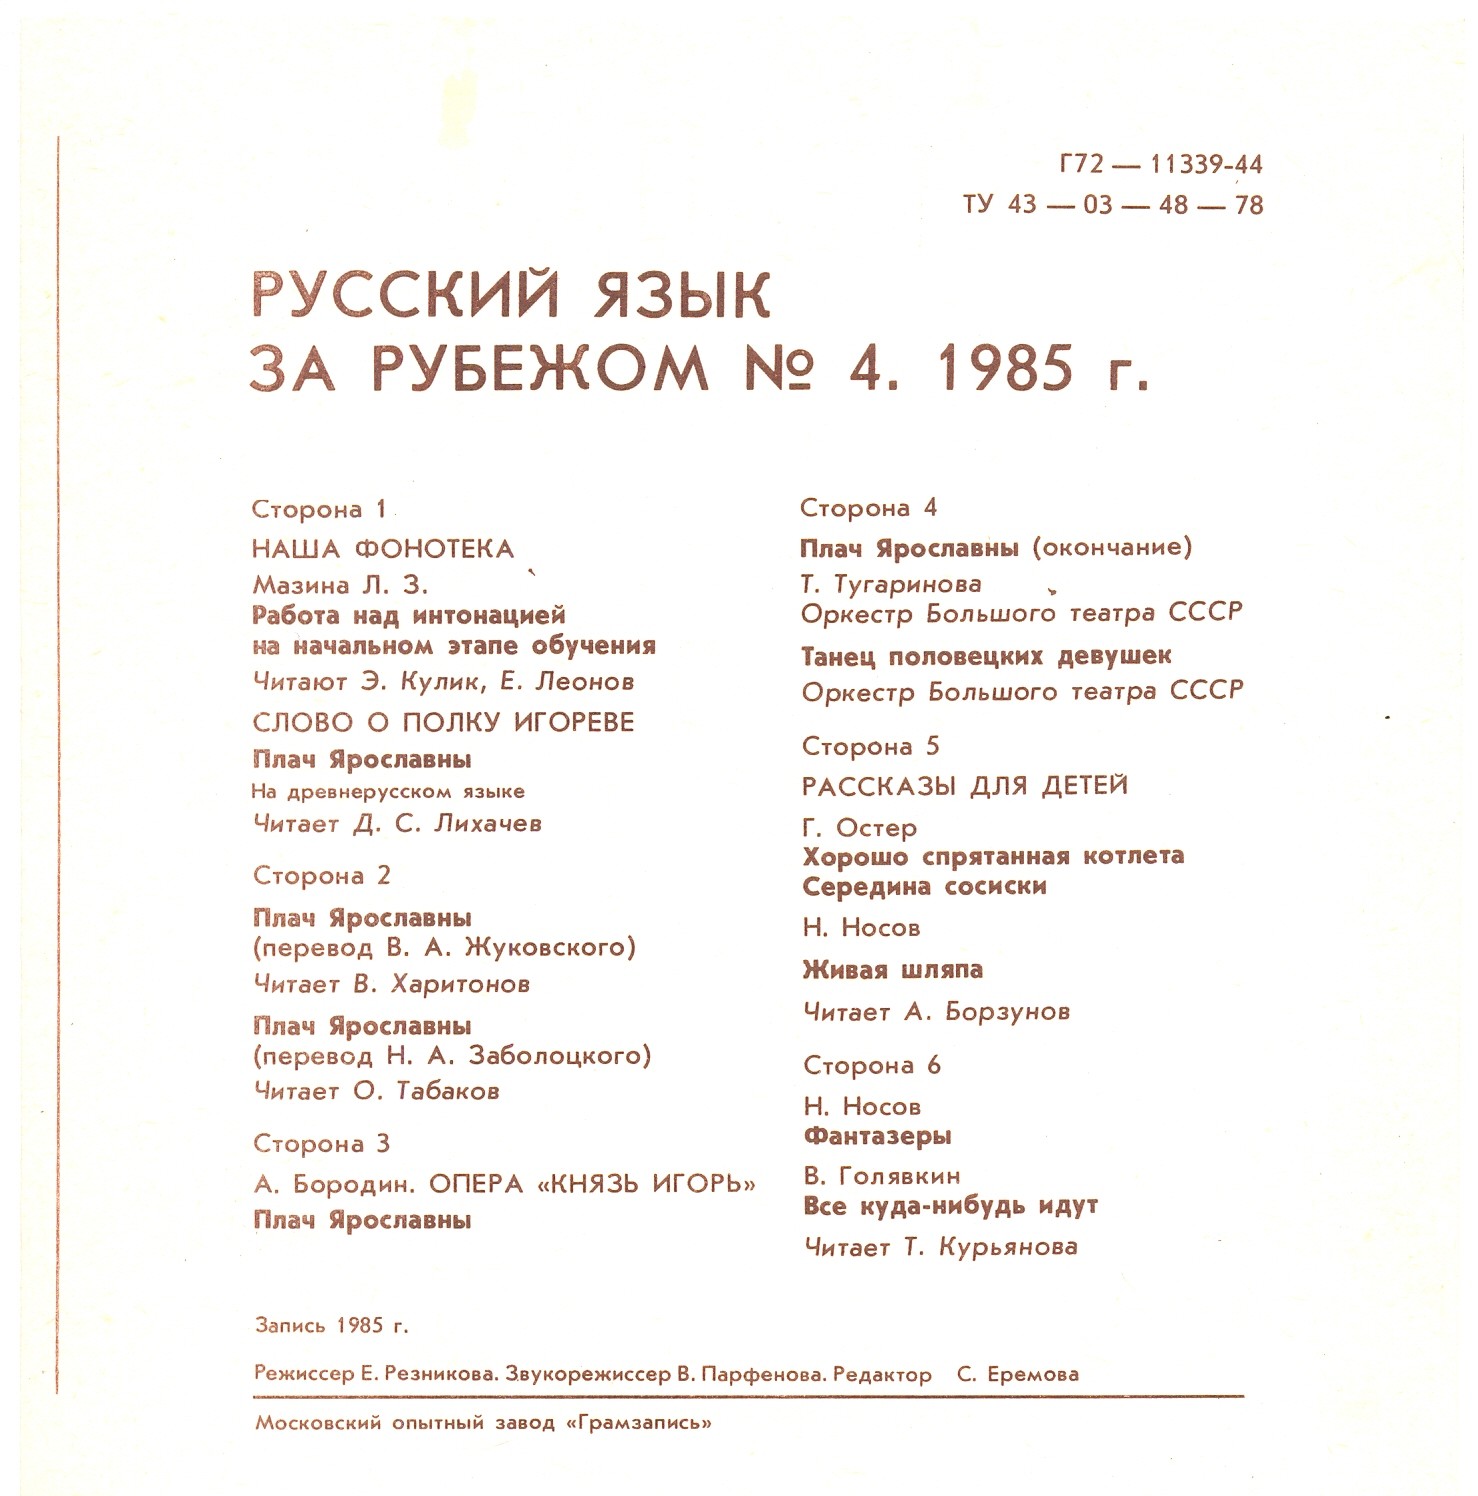 "РУССКИЙ ЯЗЫК ЗА РУБЕЖОМ", № 4 - 1985